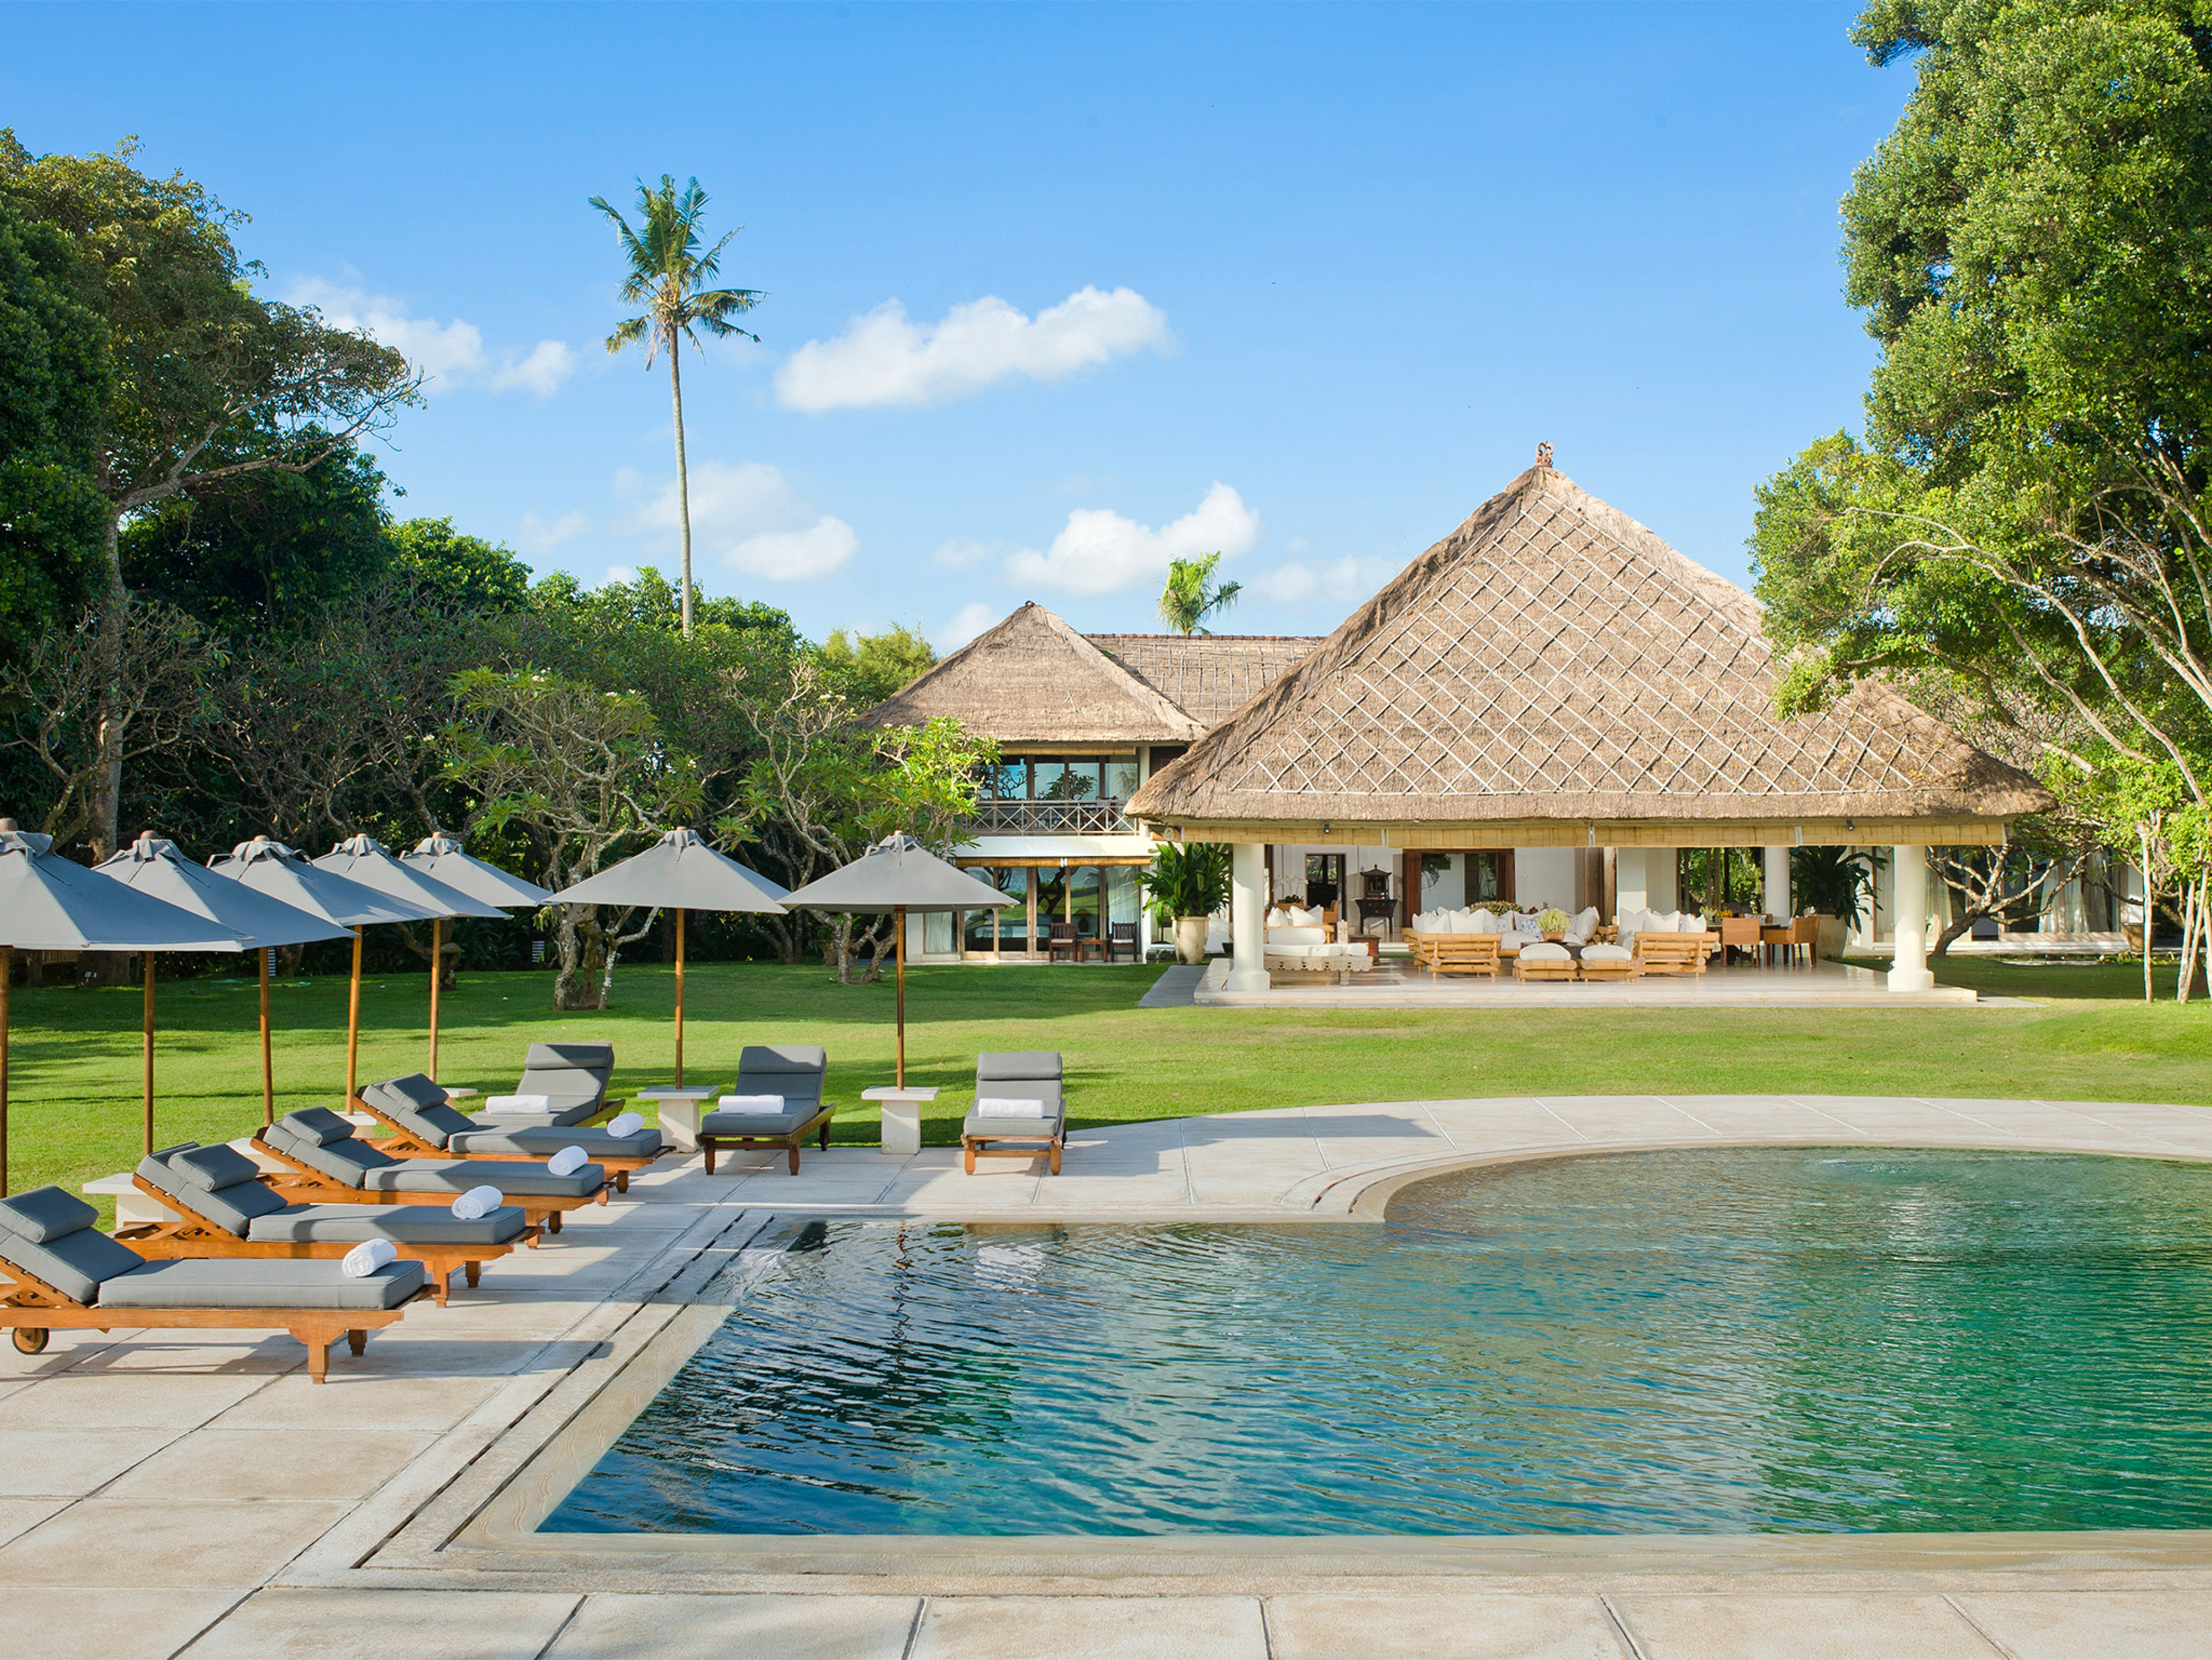 Seminyak 5695 - Villa Atas Ombak - Bali family villas in Seminyak